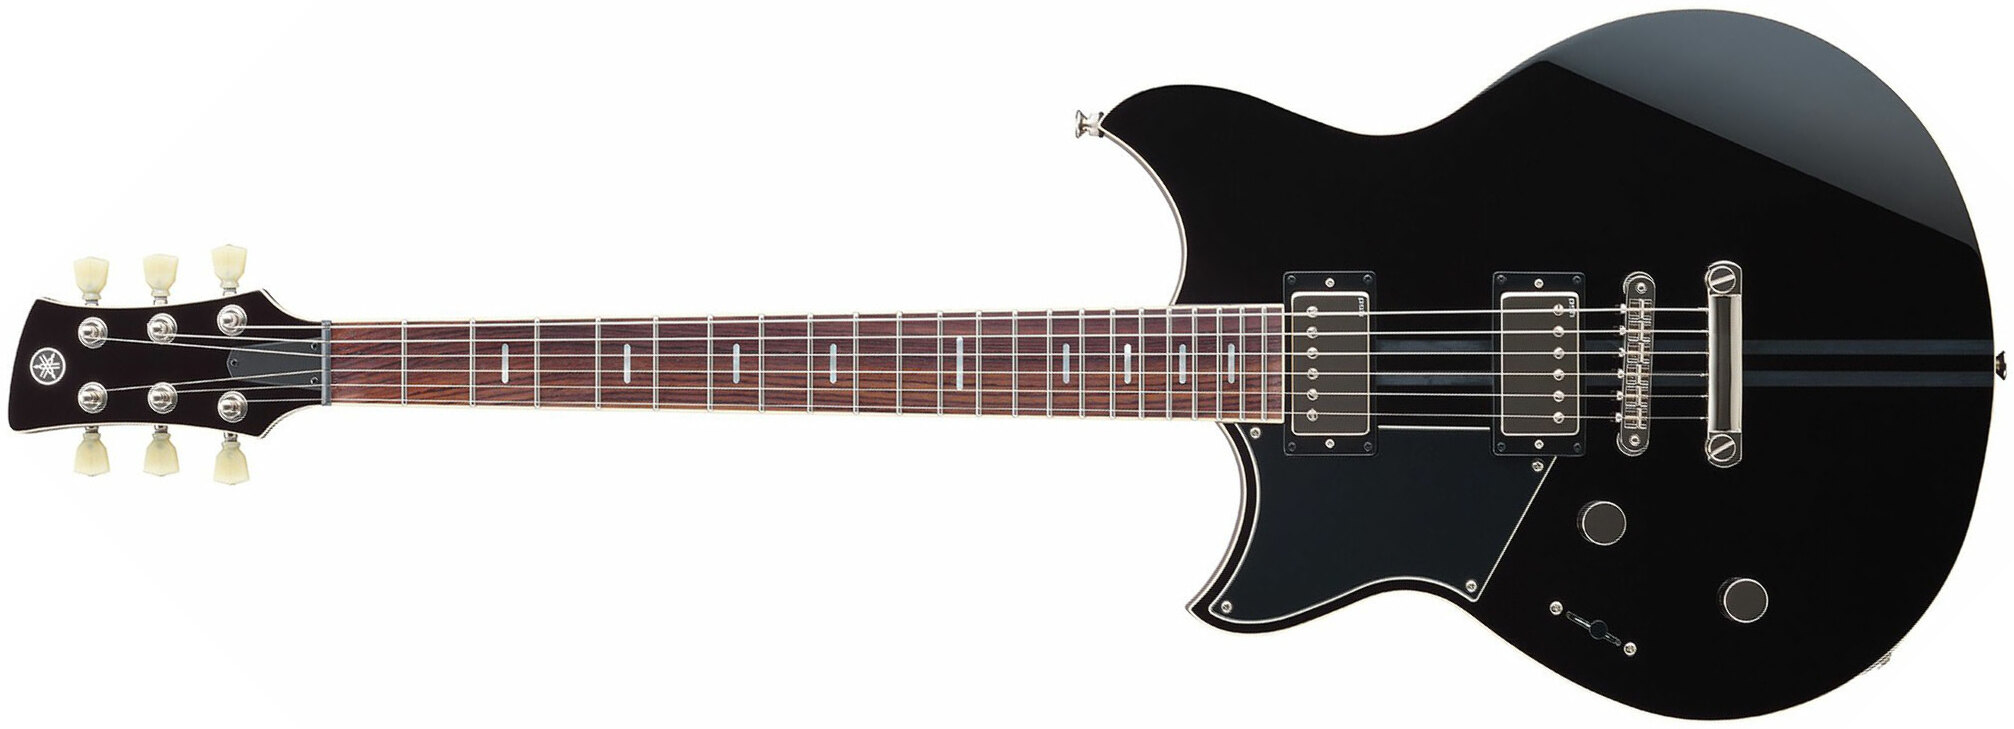 Yamaha Rss20l Revstar Standard Lh Gaucher Hh Ht Rw - Black - Linkshandige elektrische gitaar - Main picture